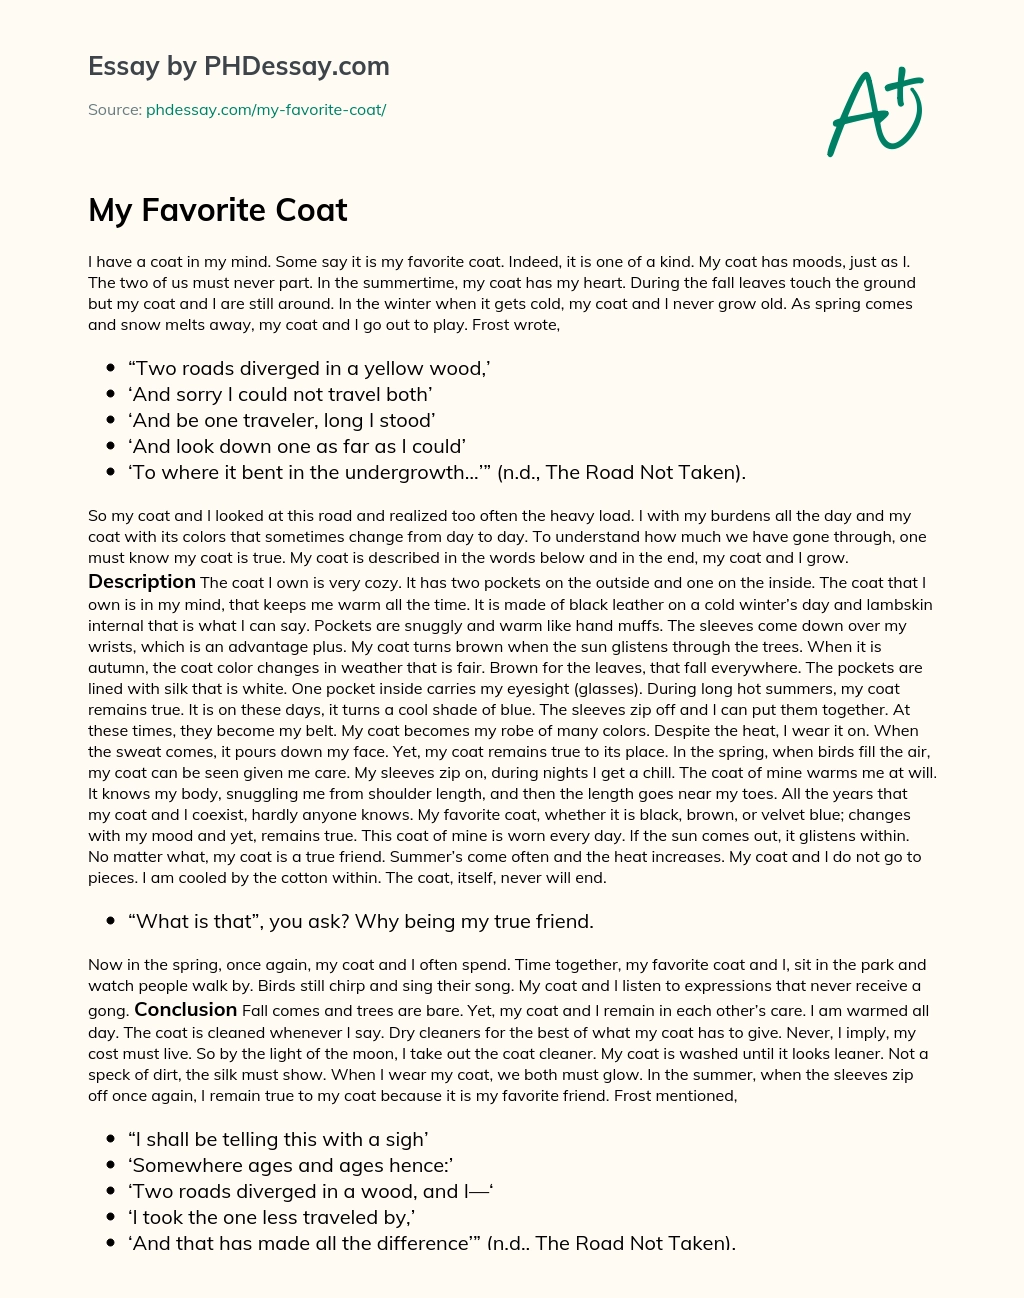 My Favorite Coat essay